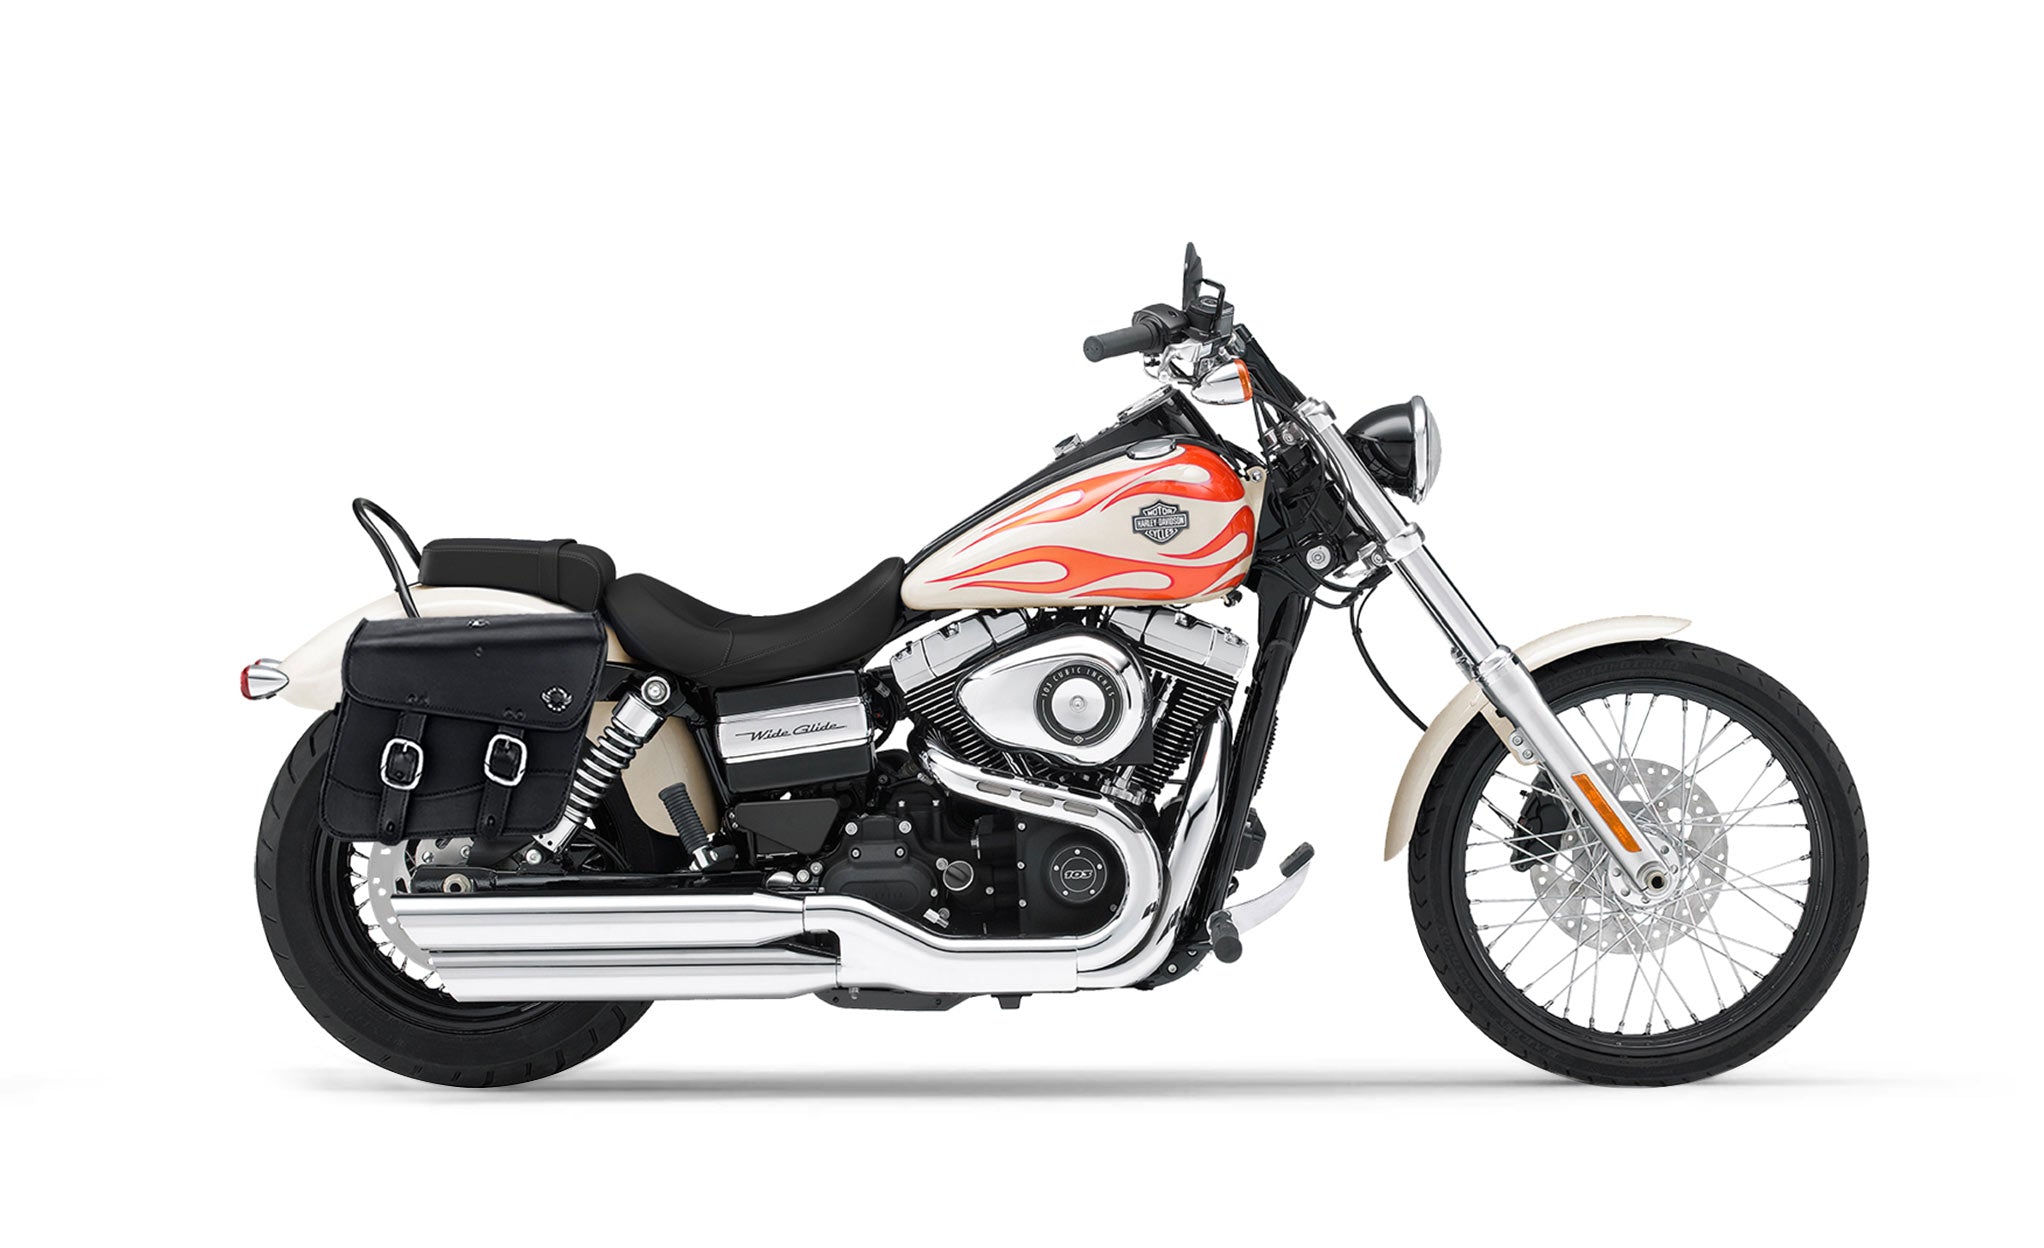 Viking Thor Medium Leather Motorcycle Saddlebags For Harley Davidson Dyna Wide Glide Fxdwg I on Bike Photo @expand